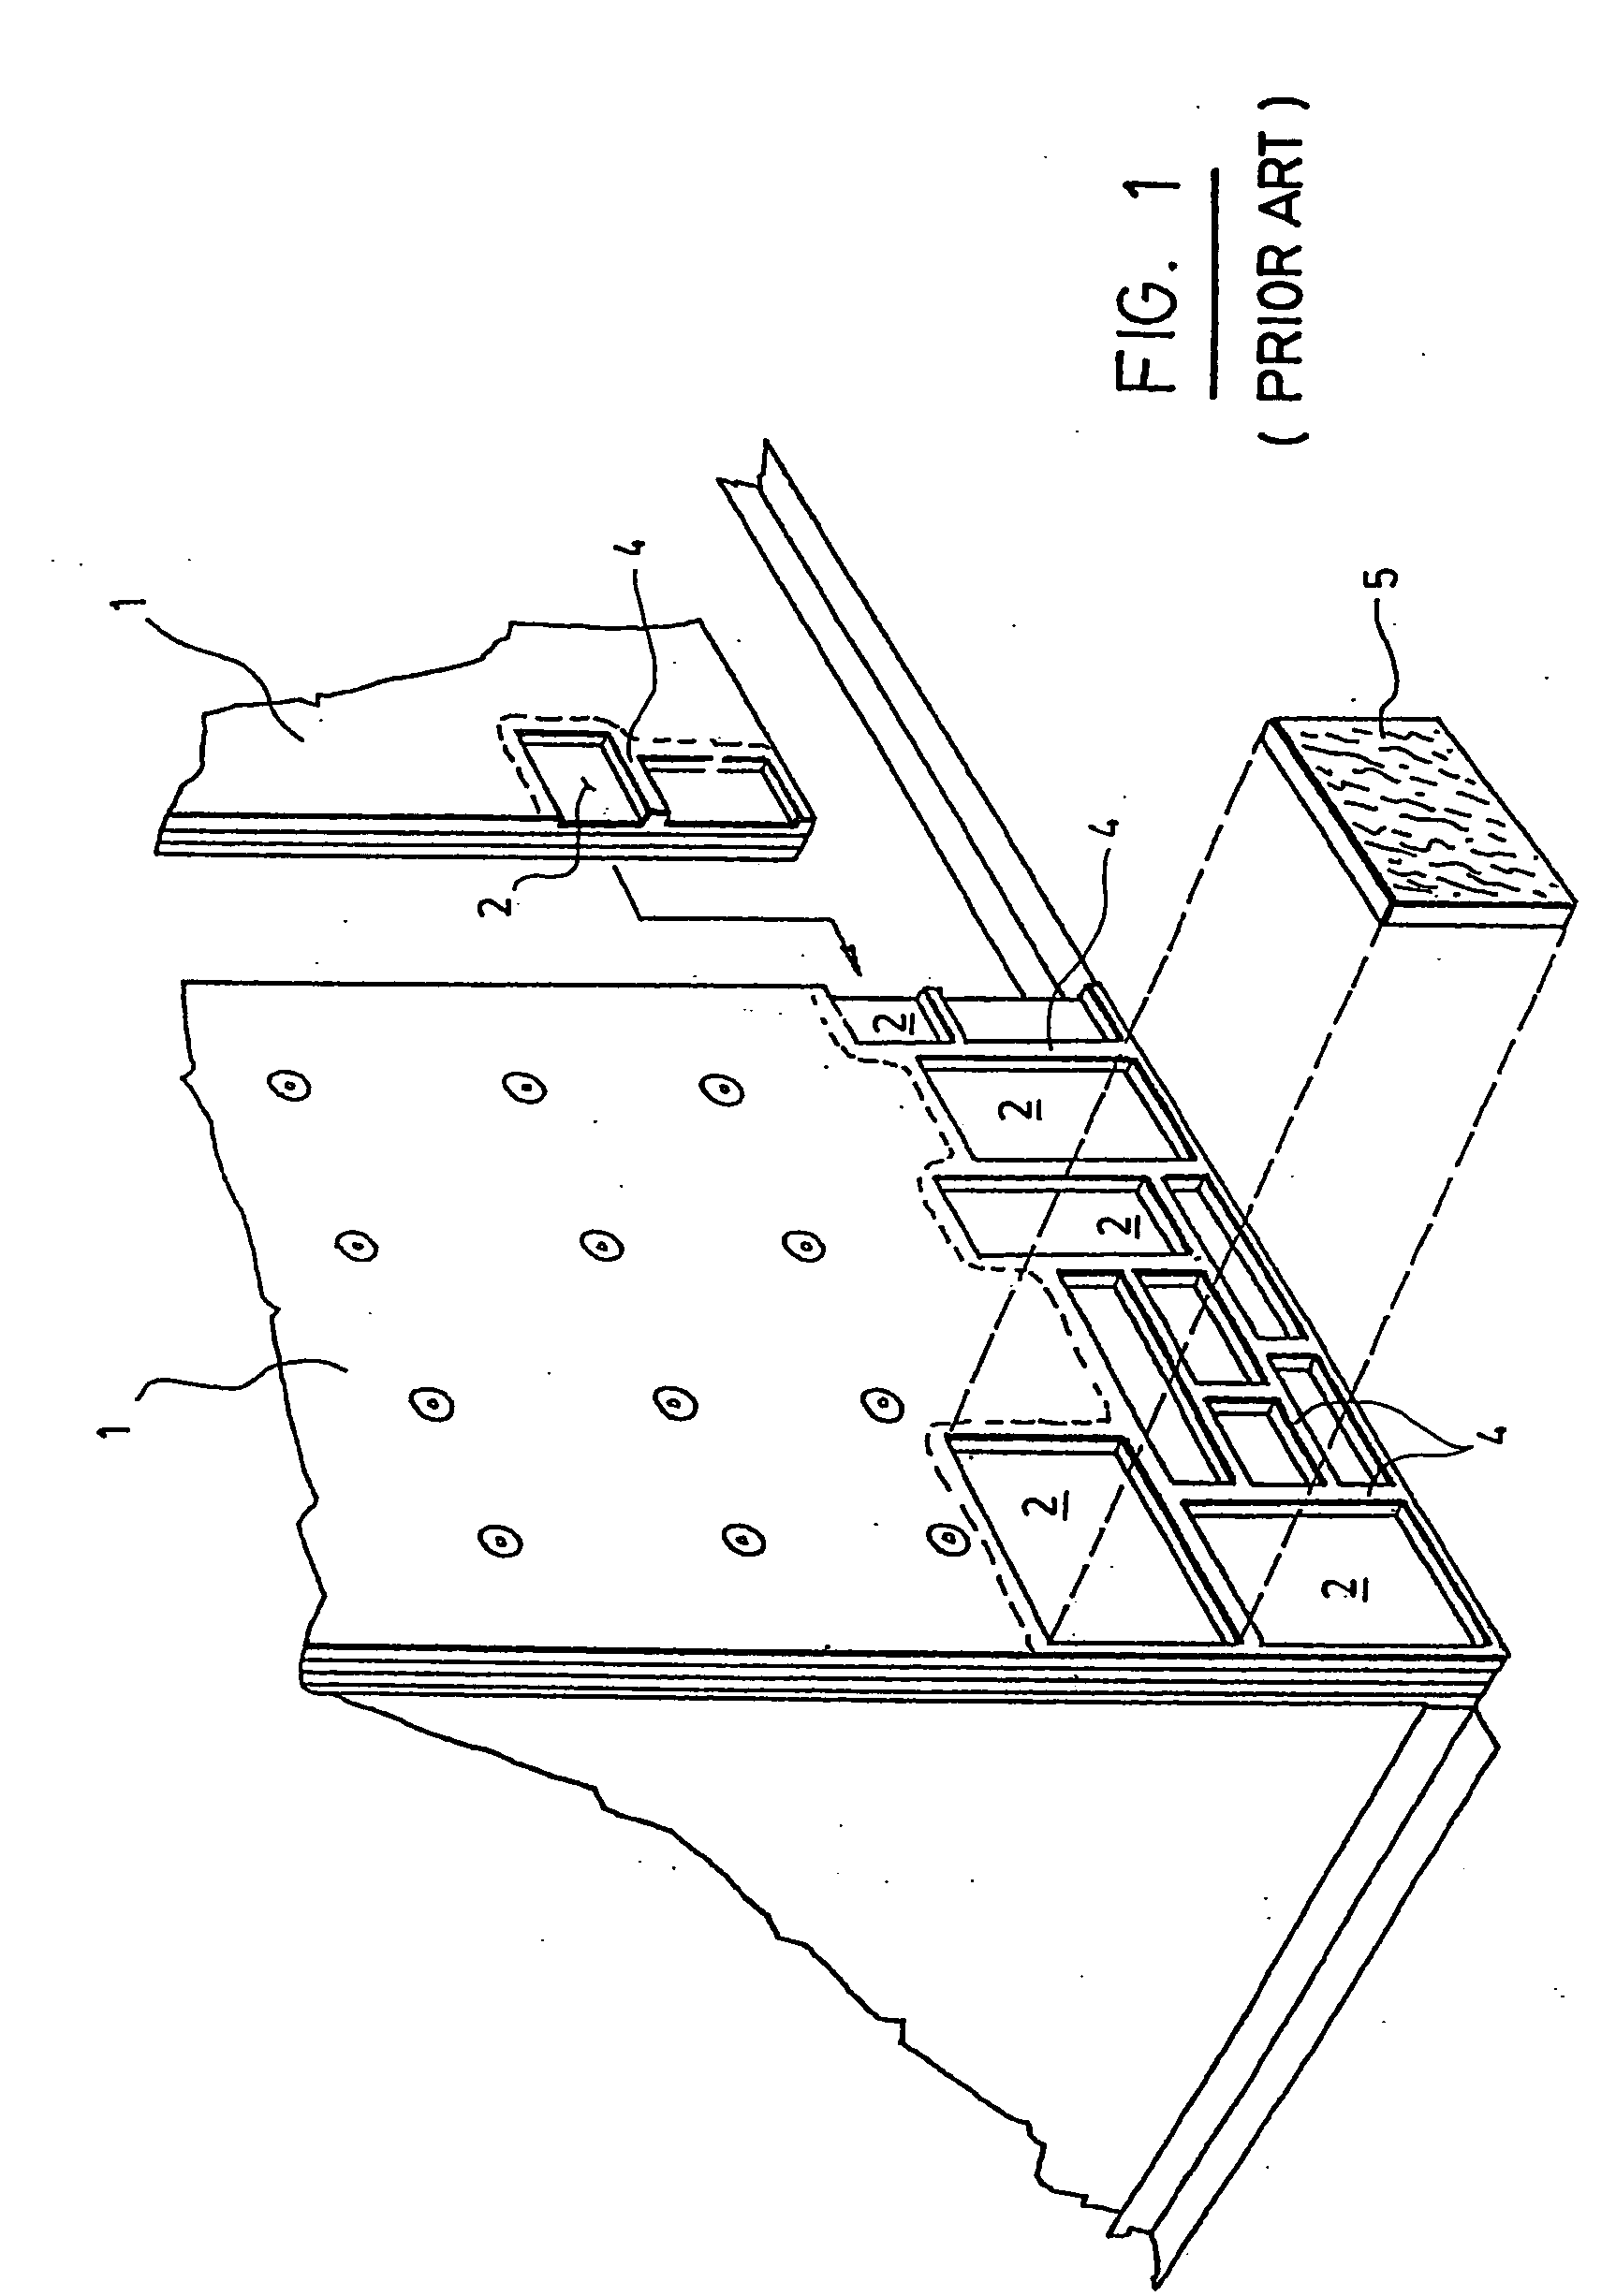 Artificial masonry unit, a masonry wall, a kit and a method for forming a masonry wall